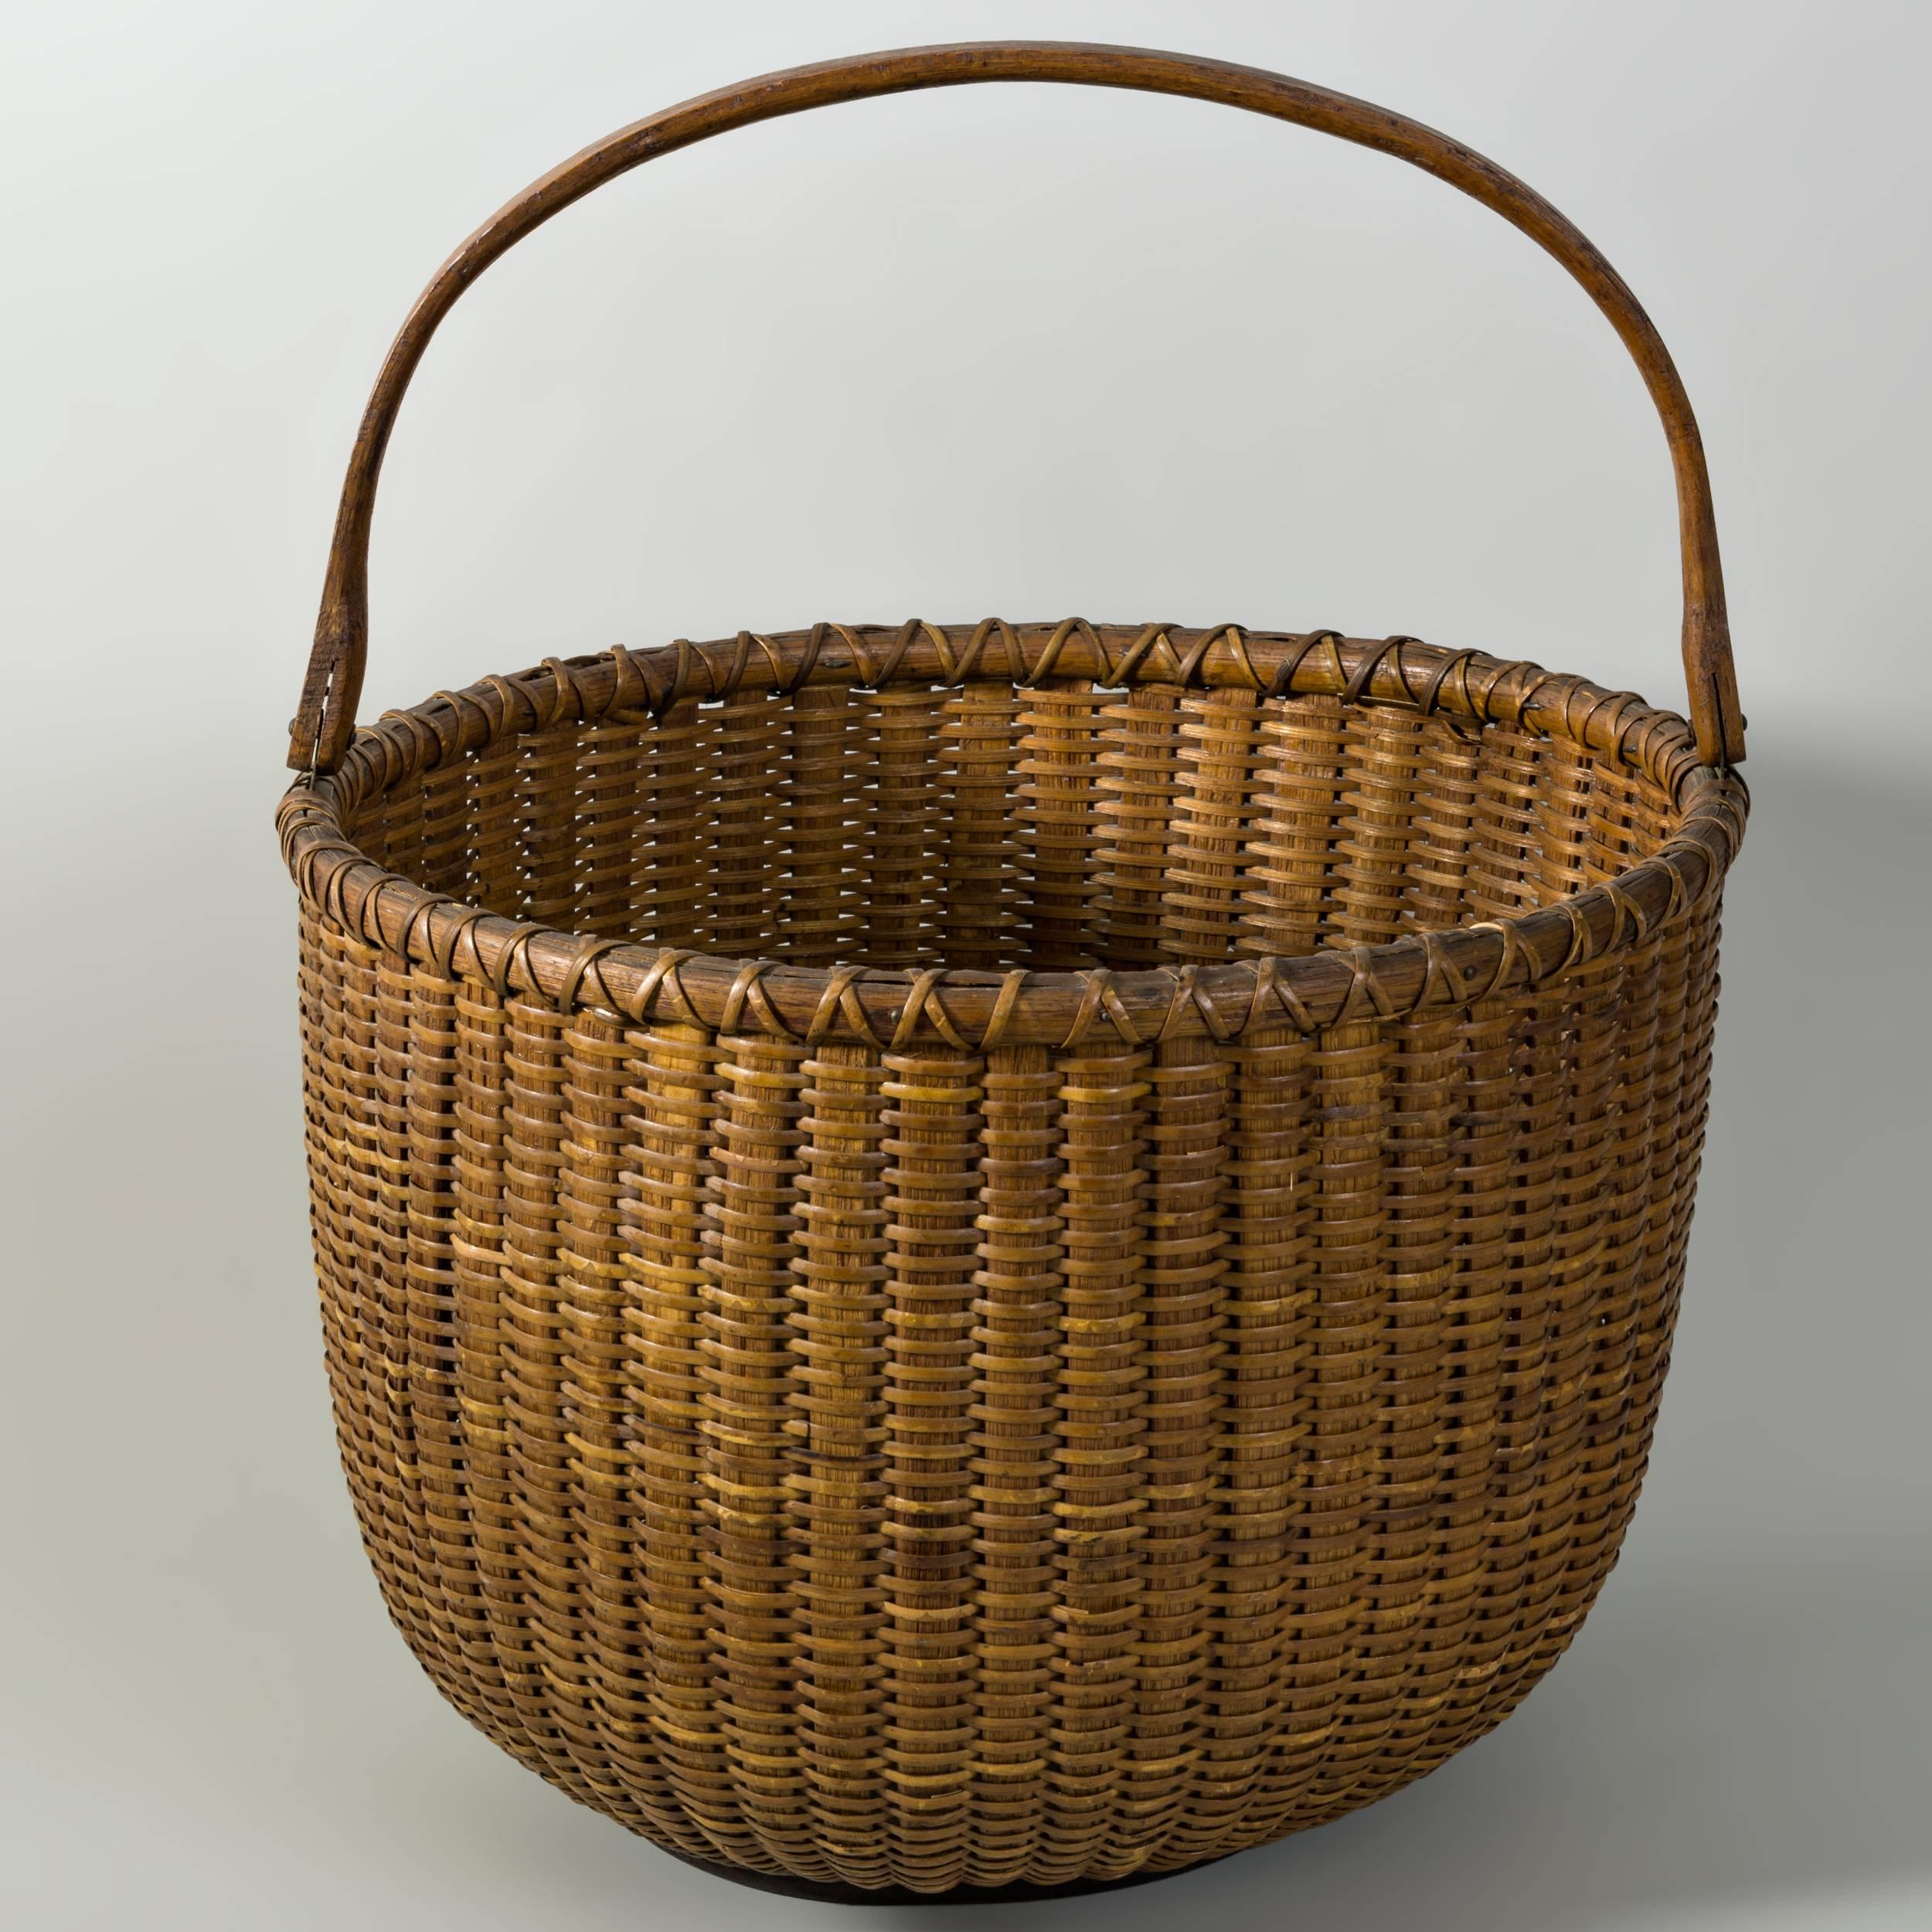 12”Open round Nantucket lightship basket
with Oak swing handle and Mahogany bottom
Attributed to Ferdinand Sylvaro (1868-1952)
c.1930
                       				    